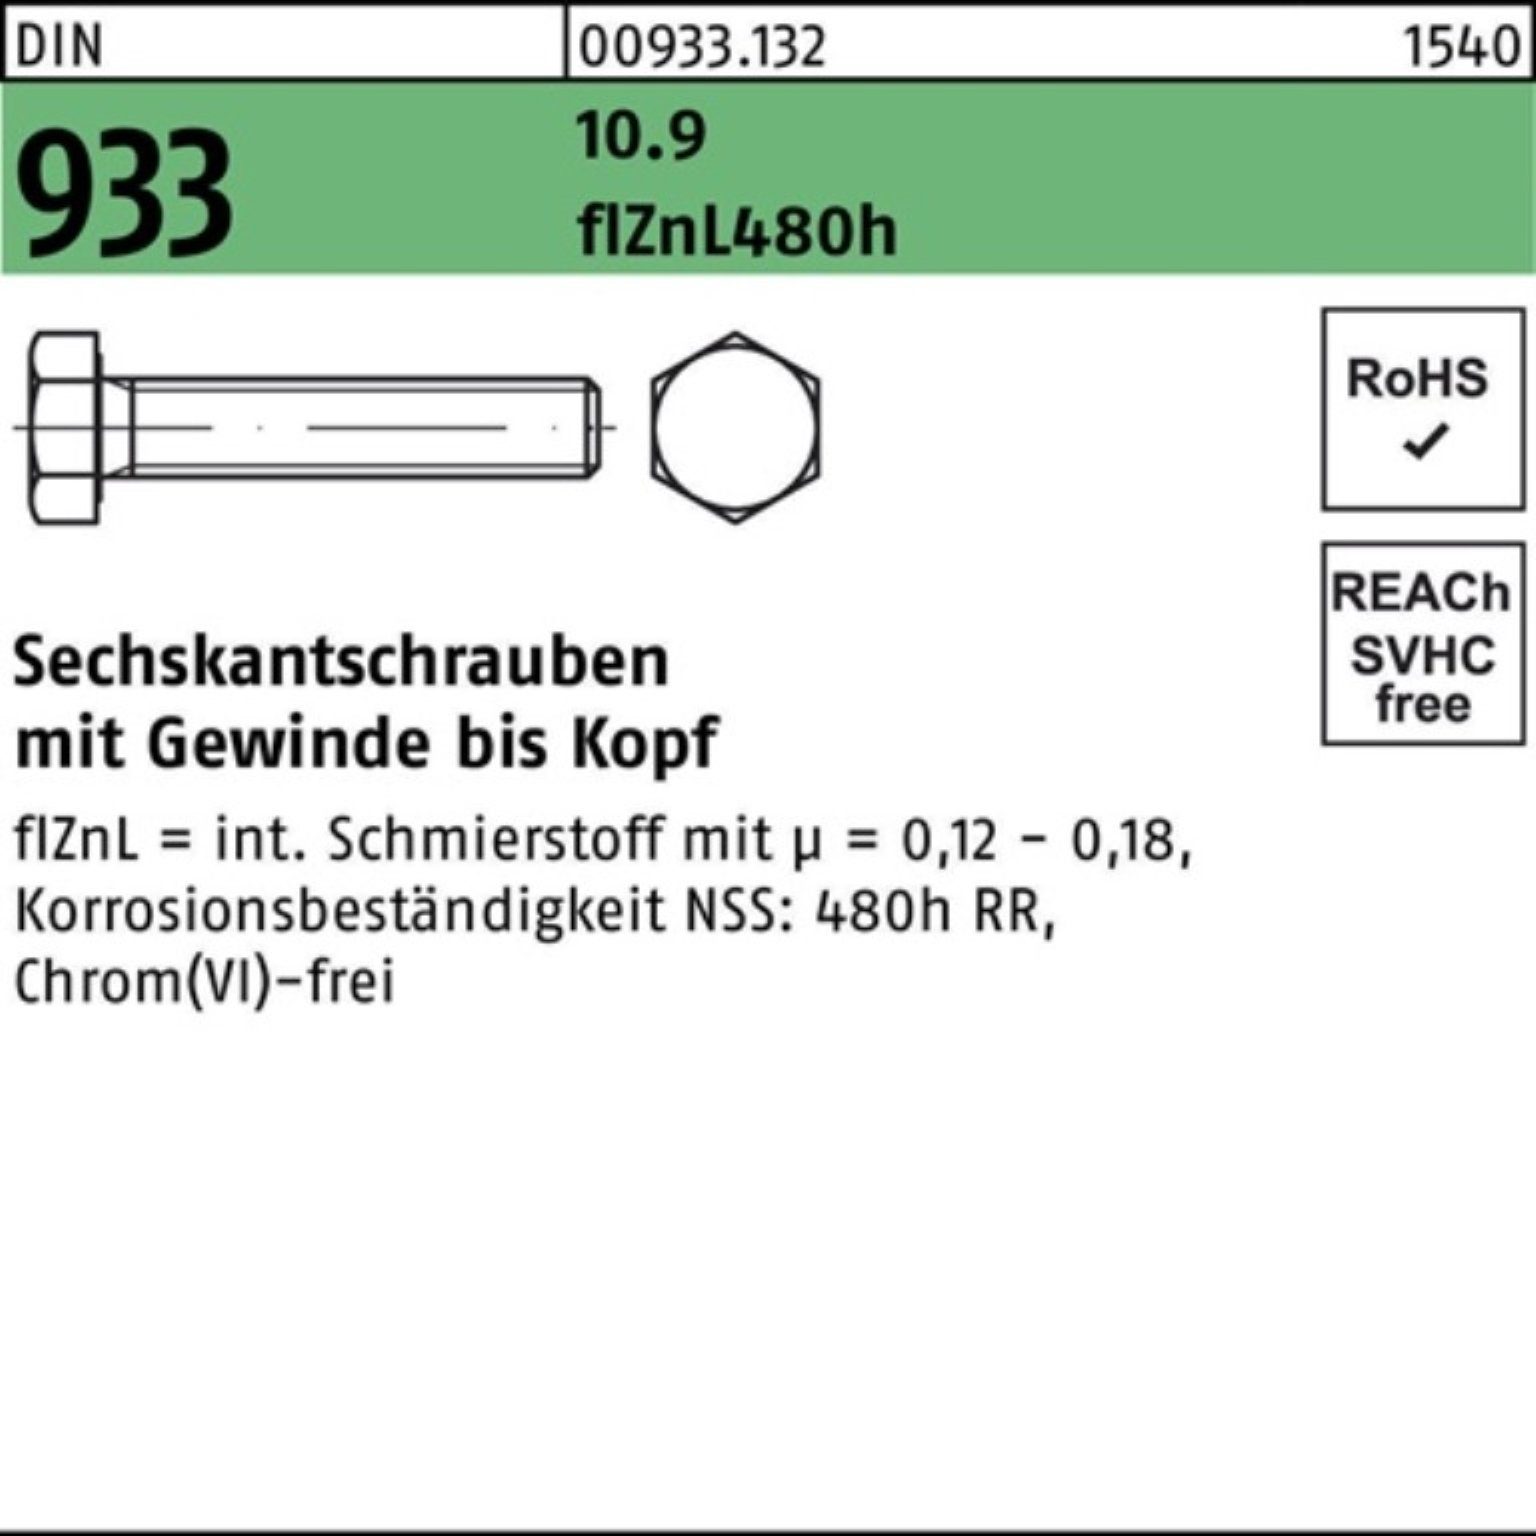 Reyher 10.9 VG Sechskantschraube DIN Pack 120 100er Sechskantschraube M20x 933 flZnL/nc/x/x/480